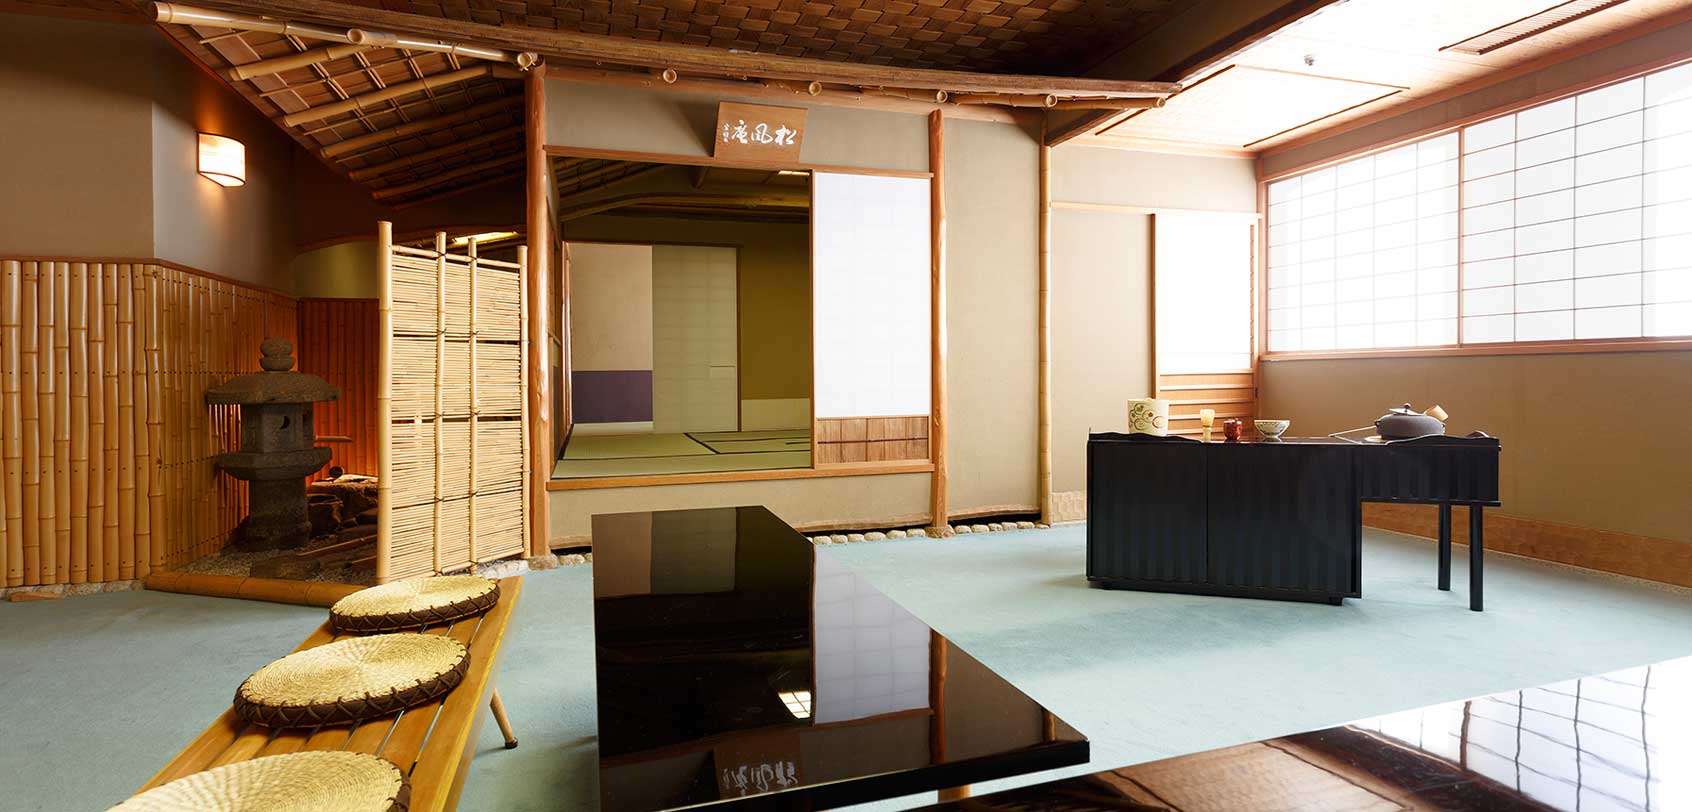 Keio Plaza Hotel Tokyo: Japanese Tea Ceremony Room